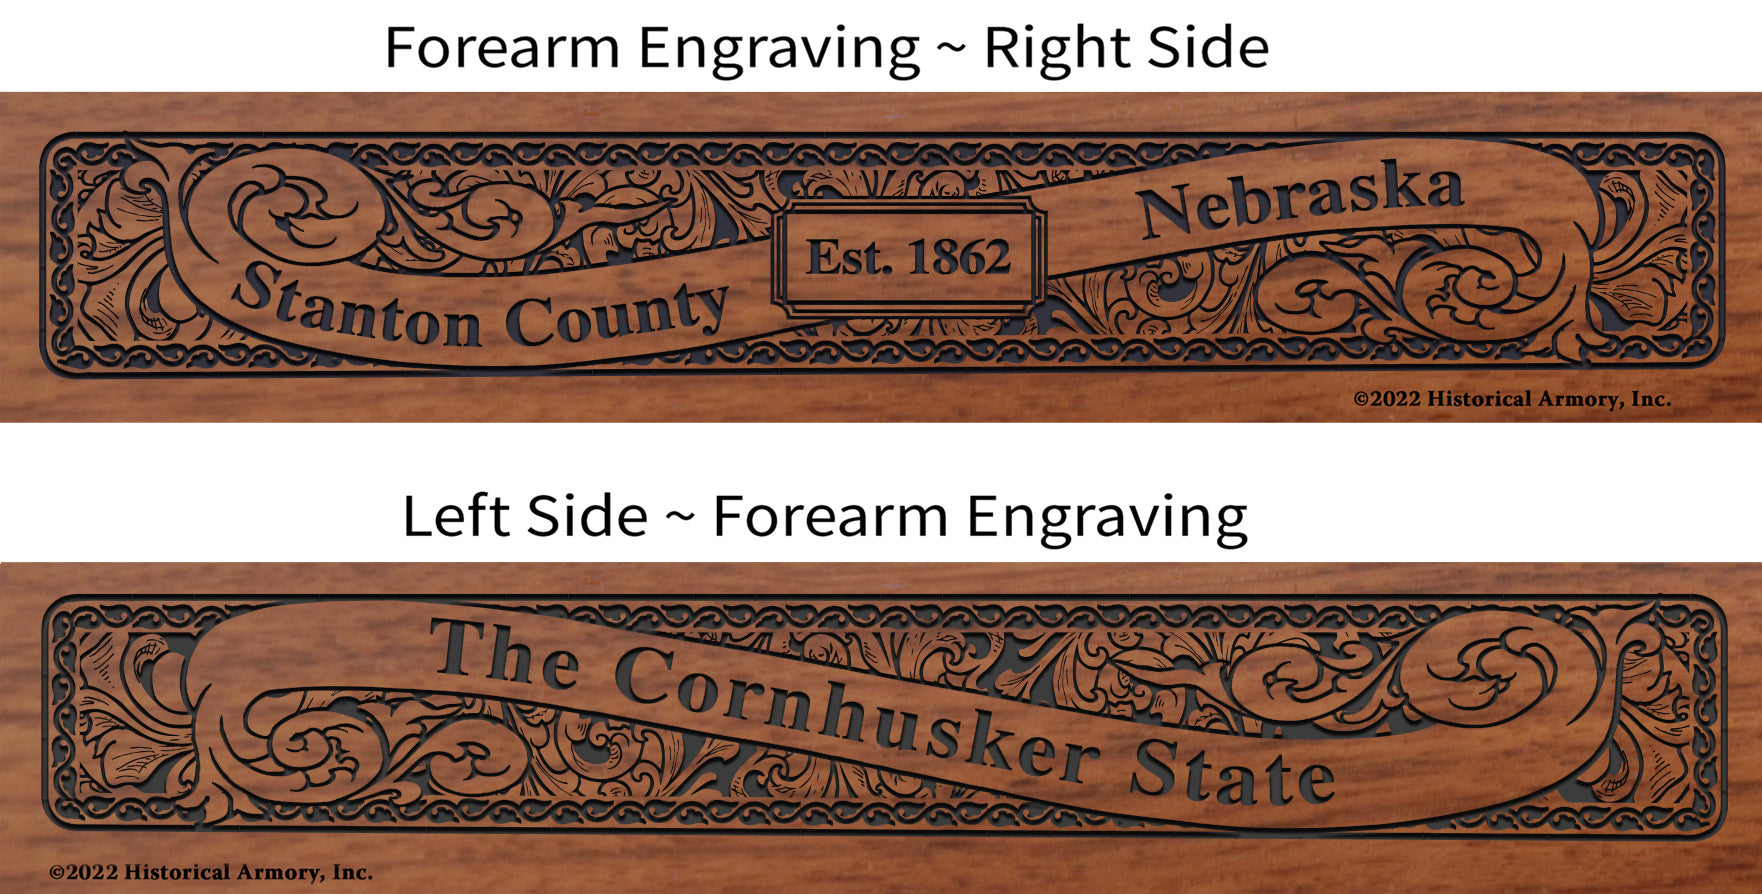 Stanton County Nebraska Engraved Rifle Forearm